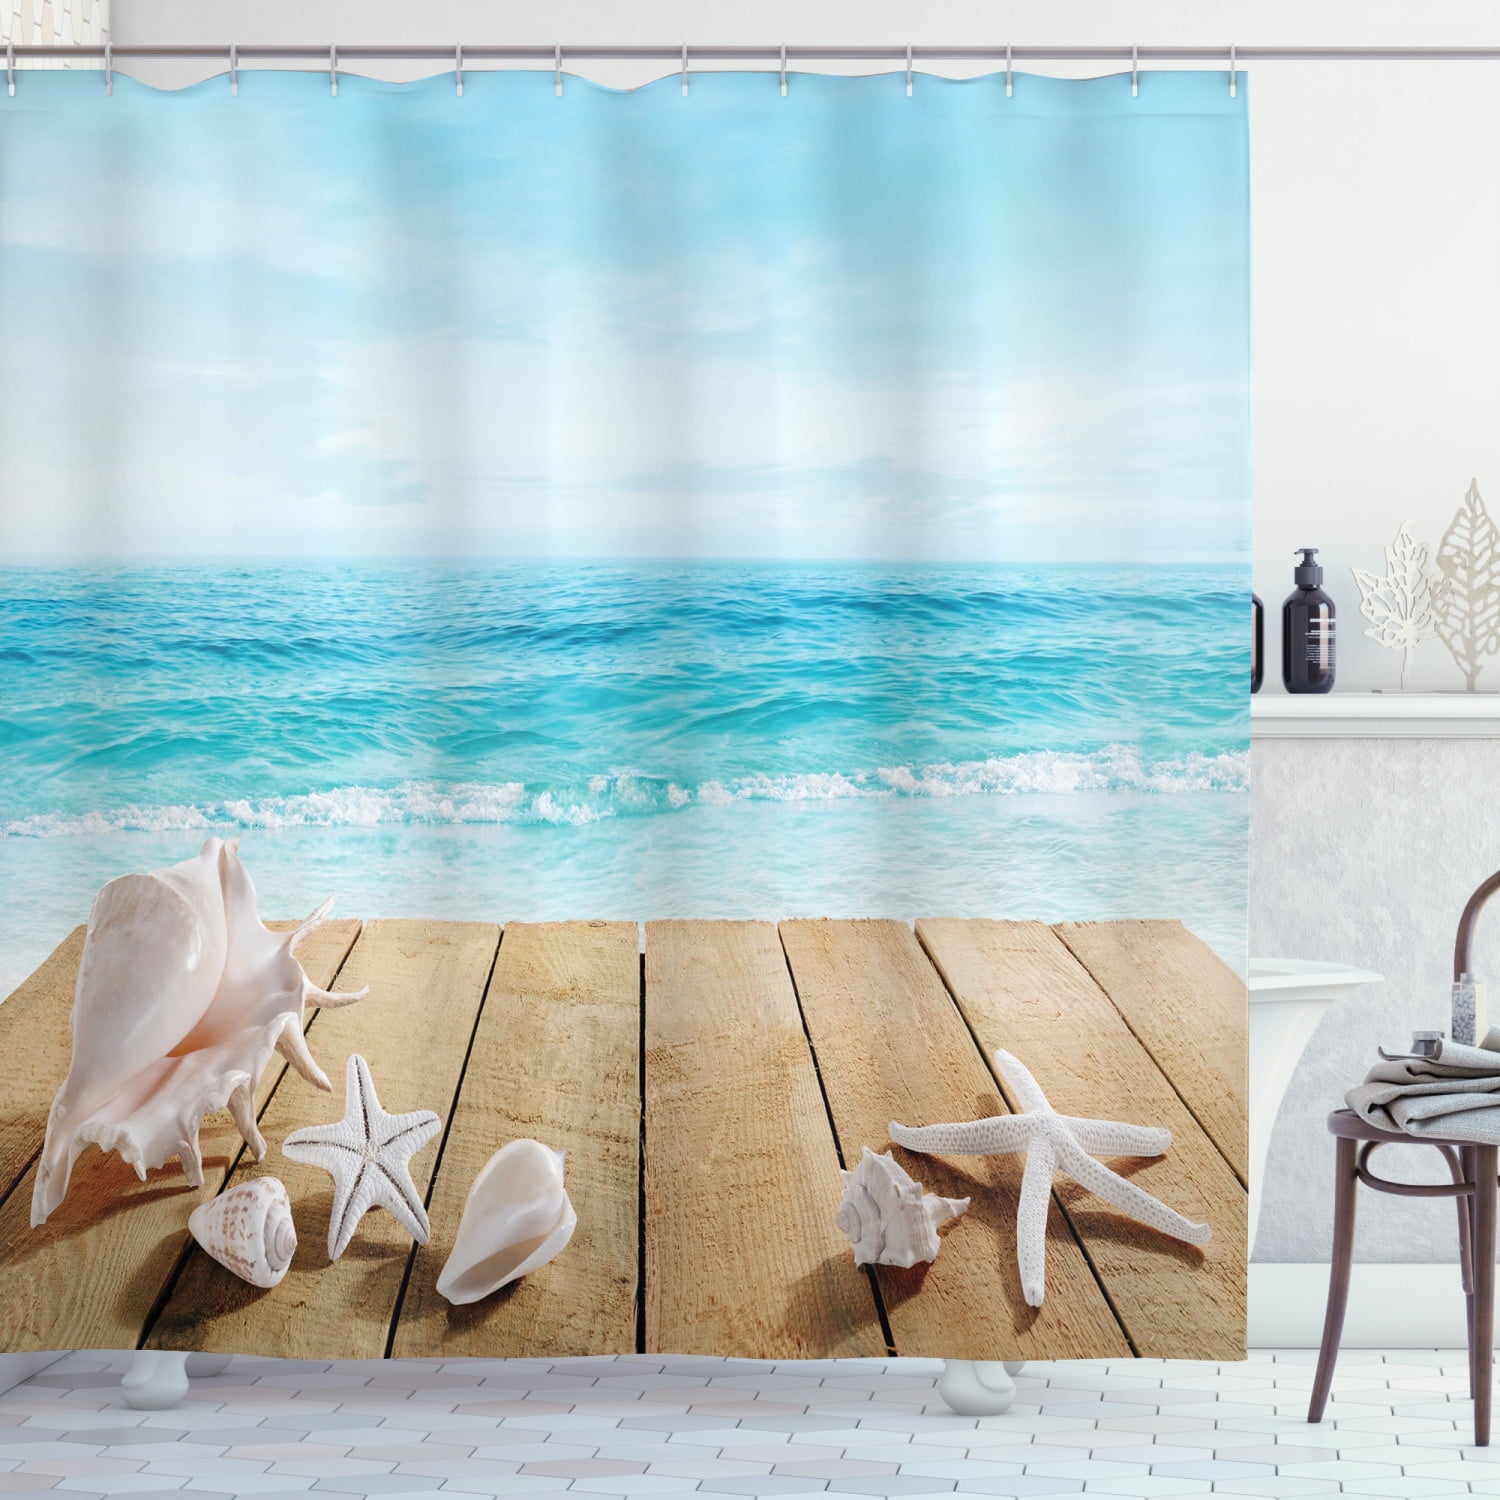 Seass Decor Shower Curtain Set, Beach Themed Shower Curtain And Accessories